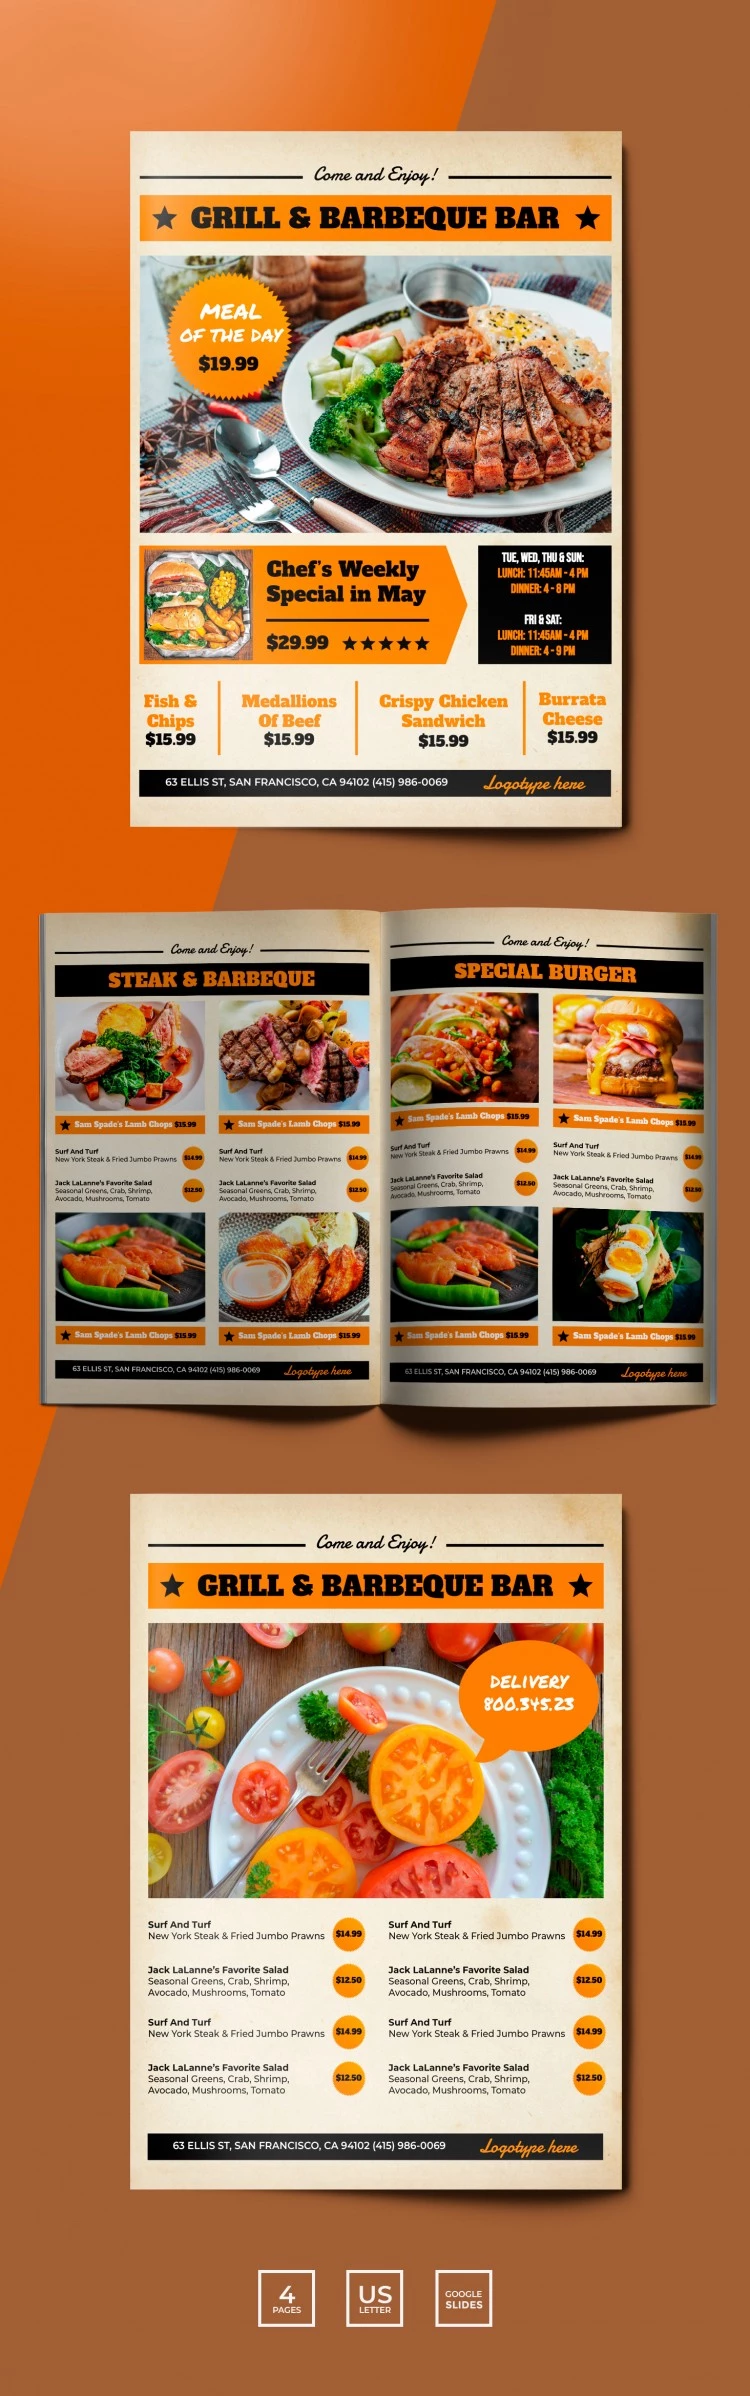 Menu du restaurant Grill et Barbecue - free Google Docs Template - 10066402